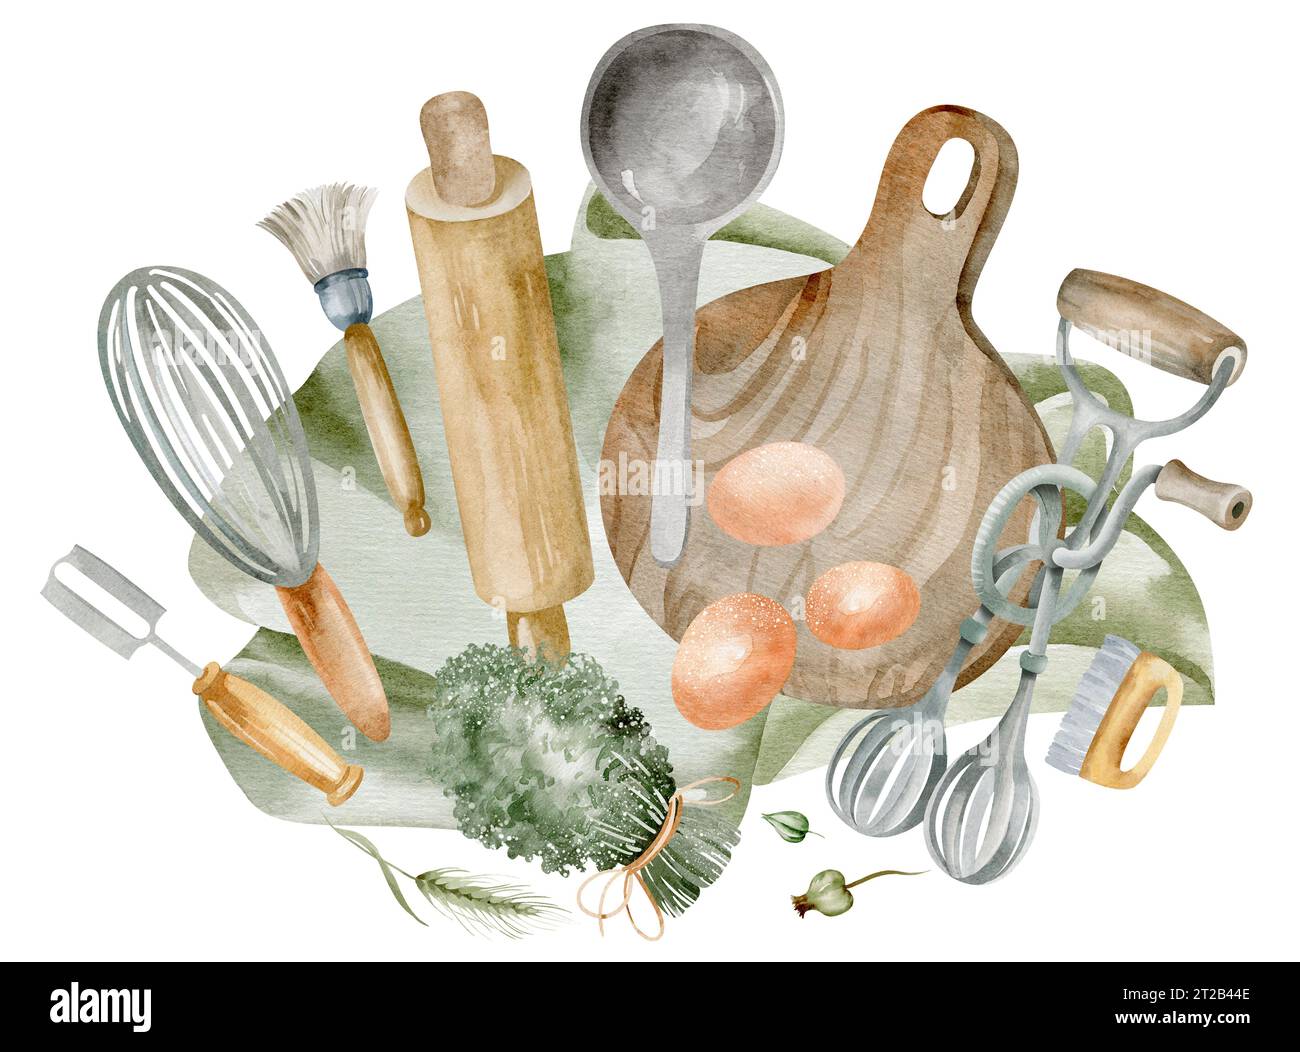 FOOD & KITCHEN :: KITCHEN :: COOKING UTENSILS [5] image - Visual